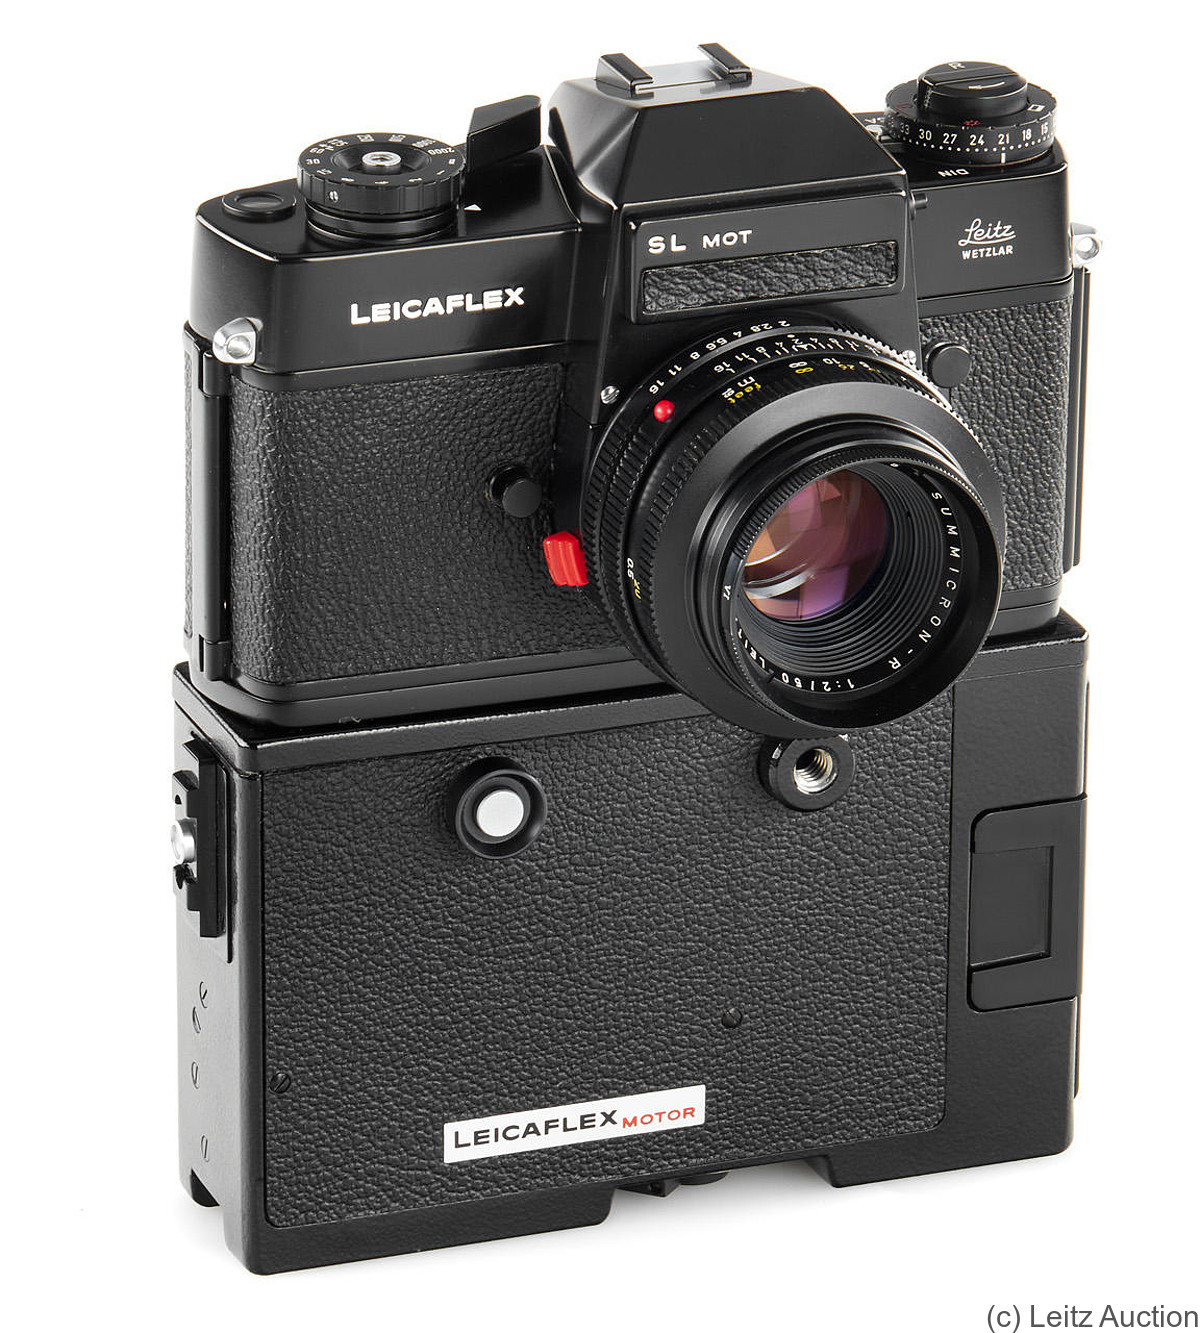 Leitz: Leicaflex SL MOT black camera